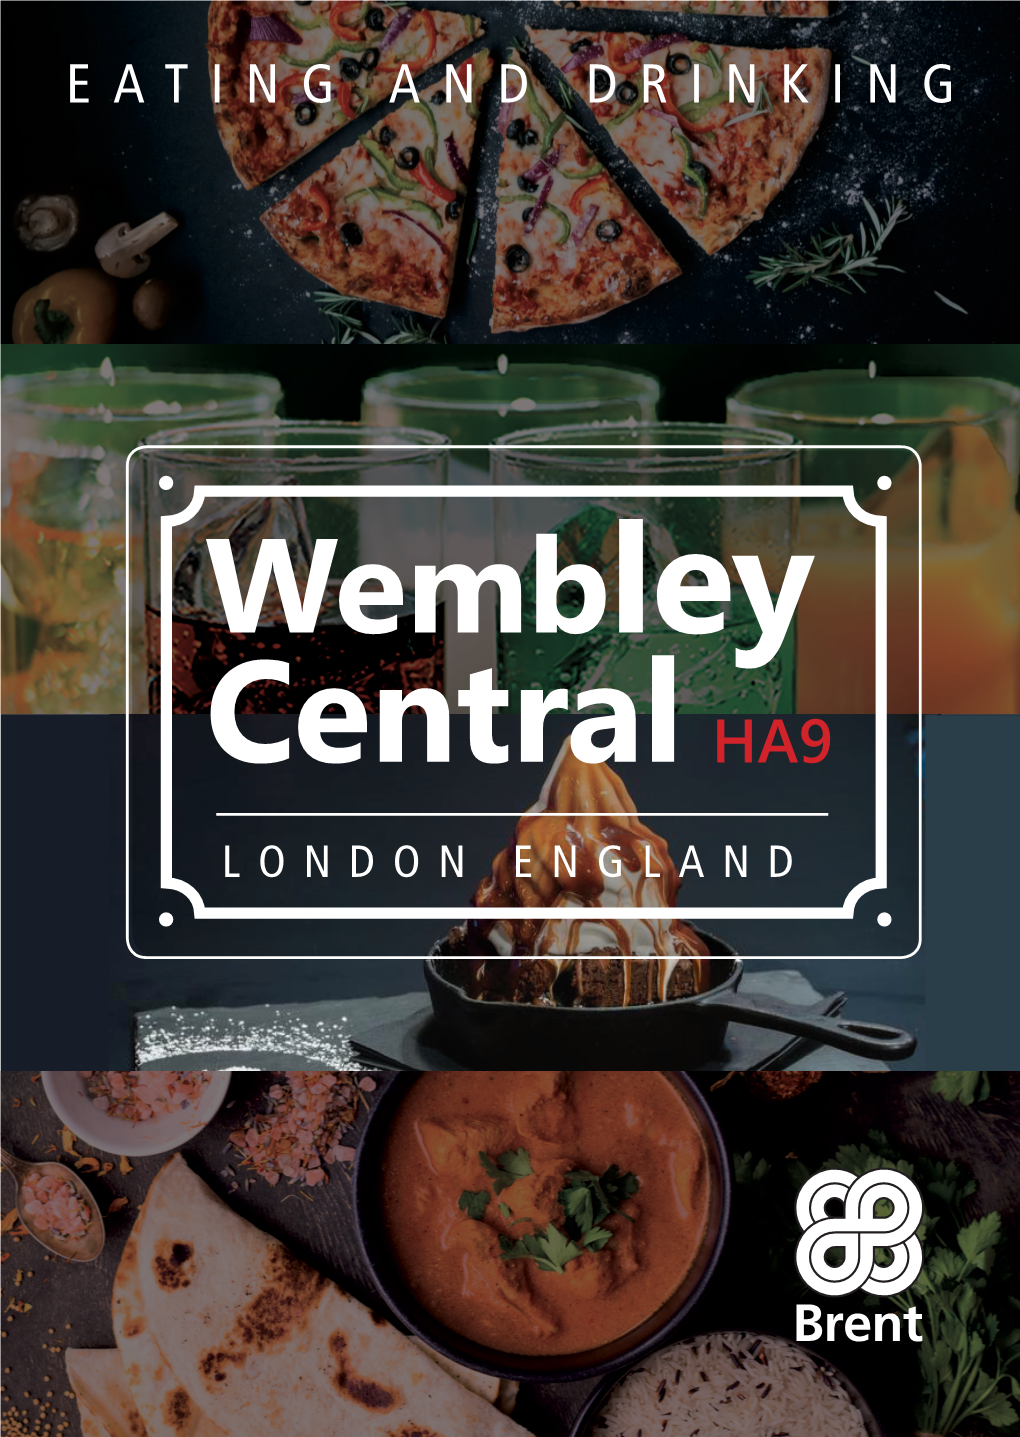 Wembley Central HA9 LONDON ENGLAND